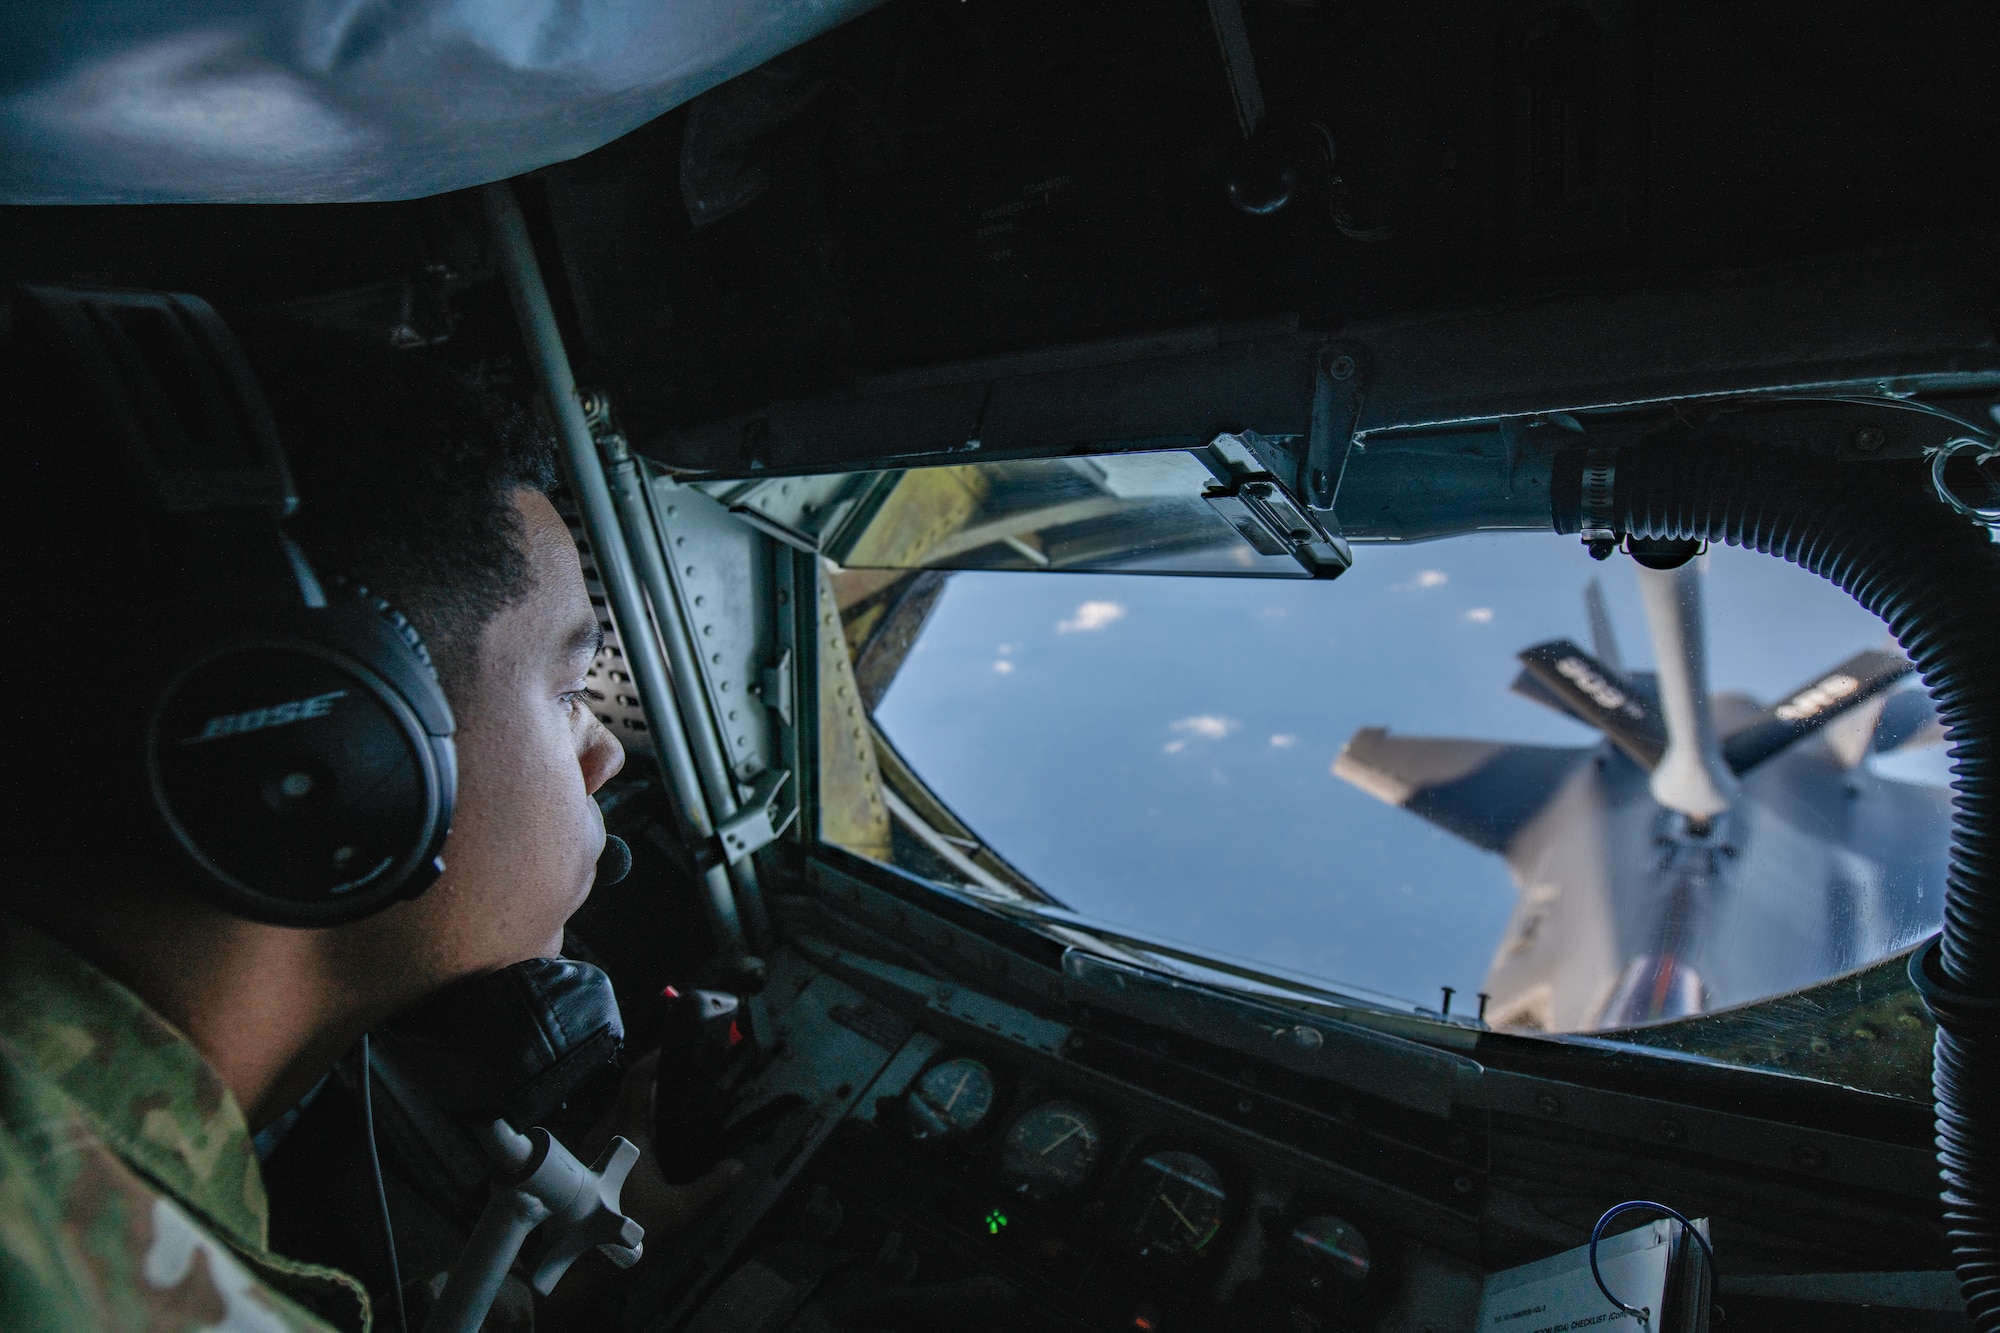 An Airman watches as he refuels a fighter jet